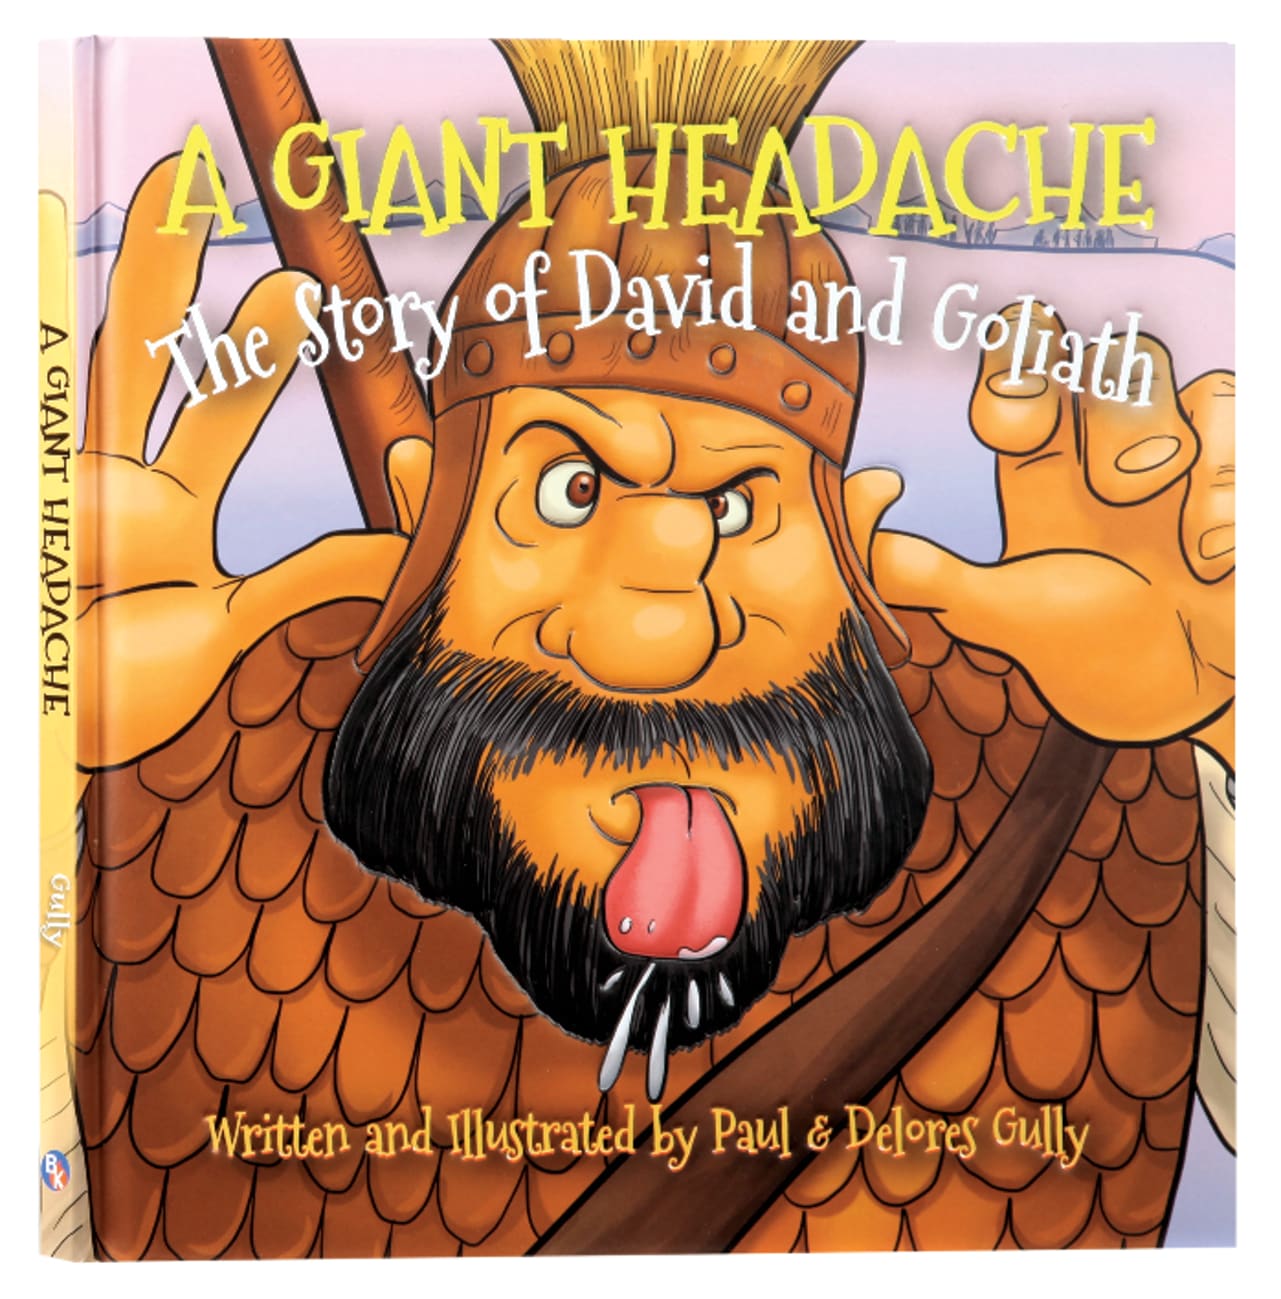 A Giant Headache: The Story of David and Goliath Hardback